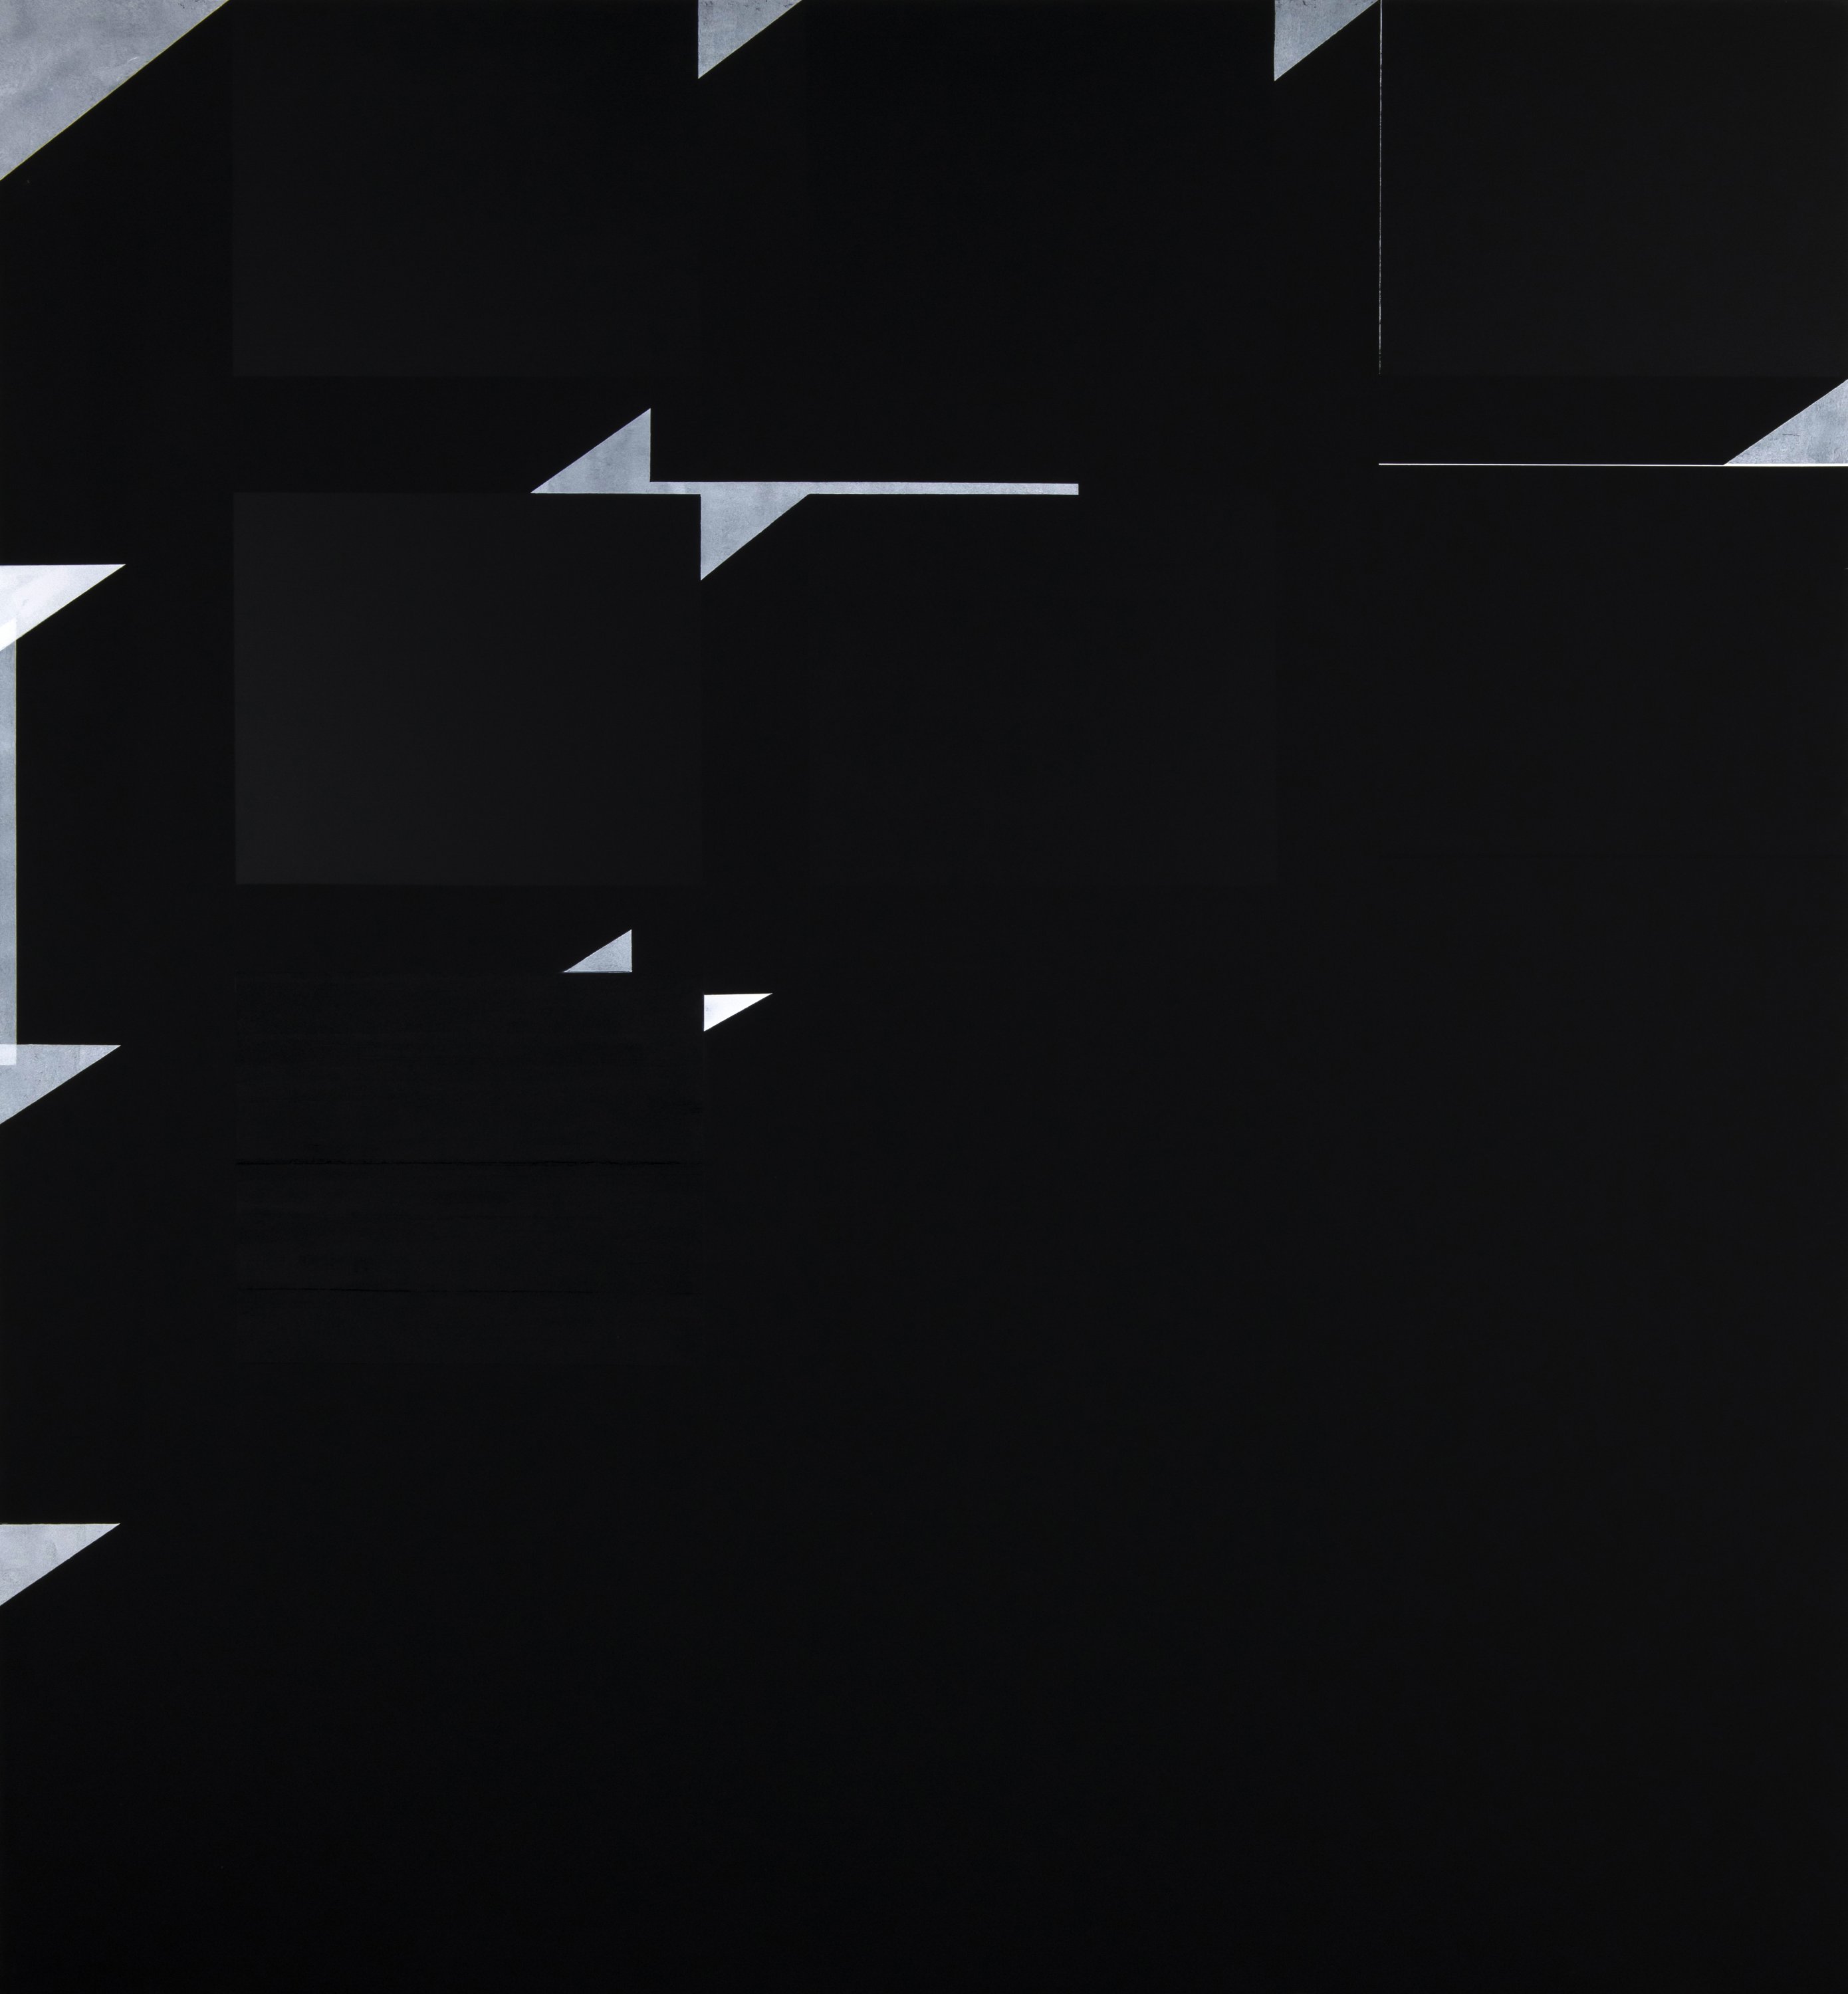 Nuri Kuzucan, 'Black Cubes, White Gaps,' 2020, acrylic on canvas, 210 by 195 centimeters (photo courtesy of Galerist).